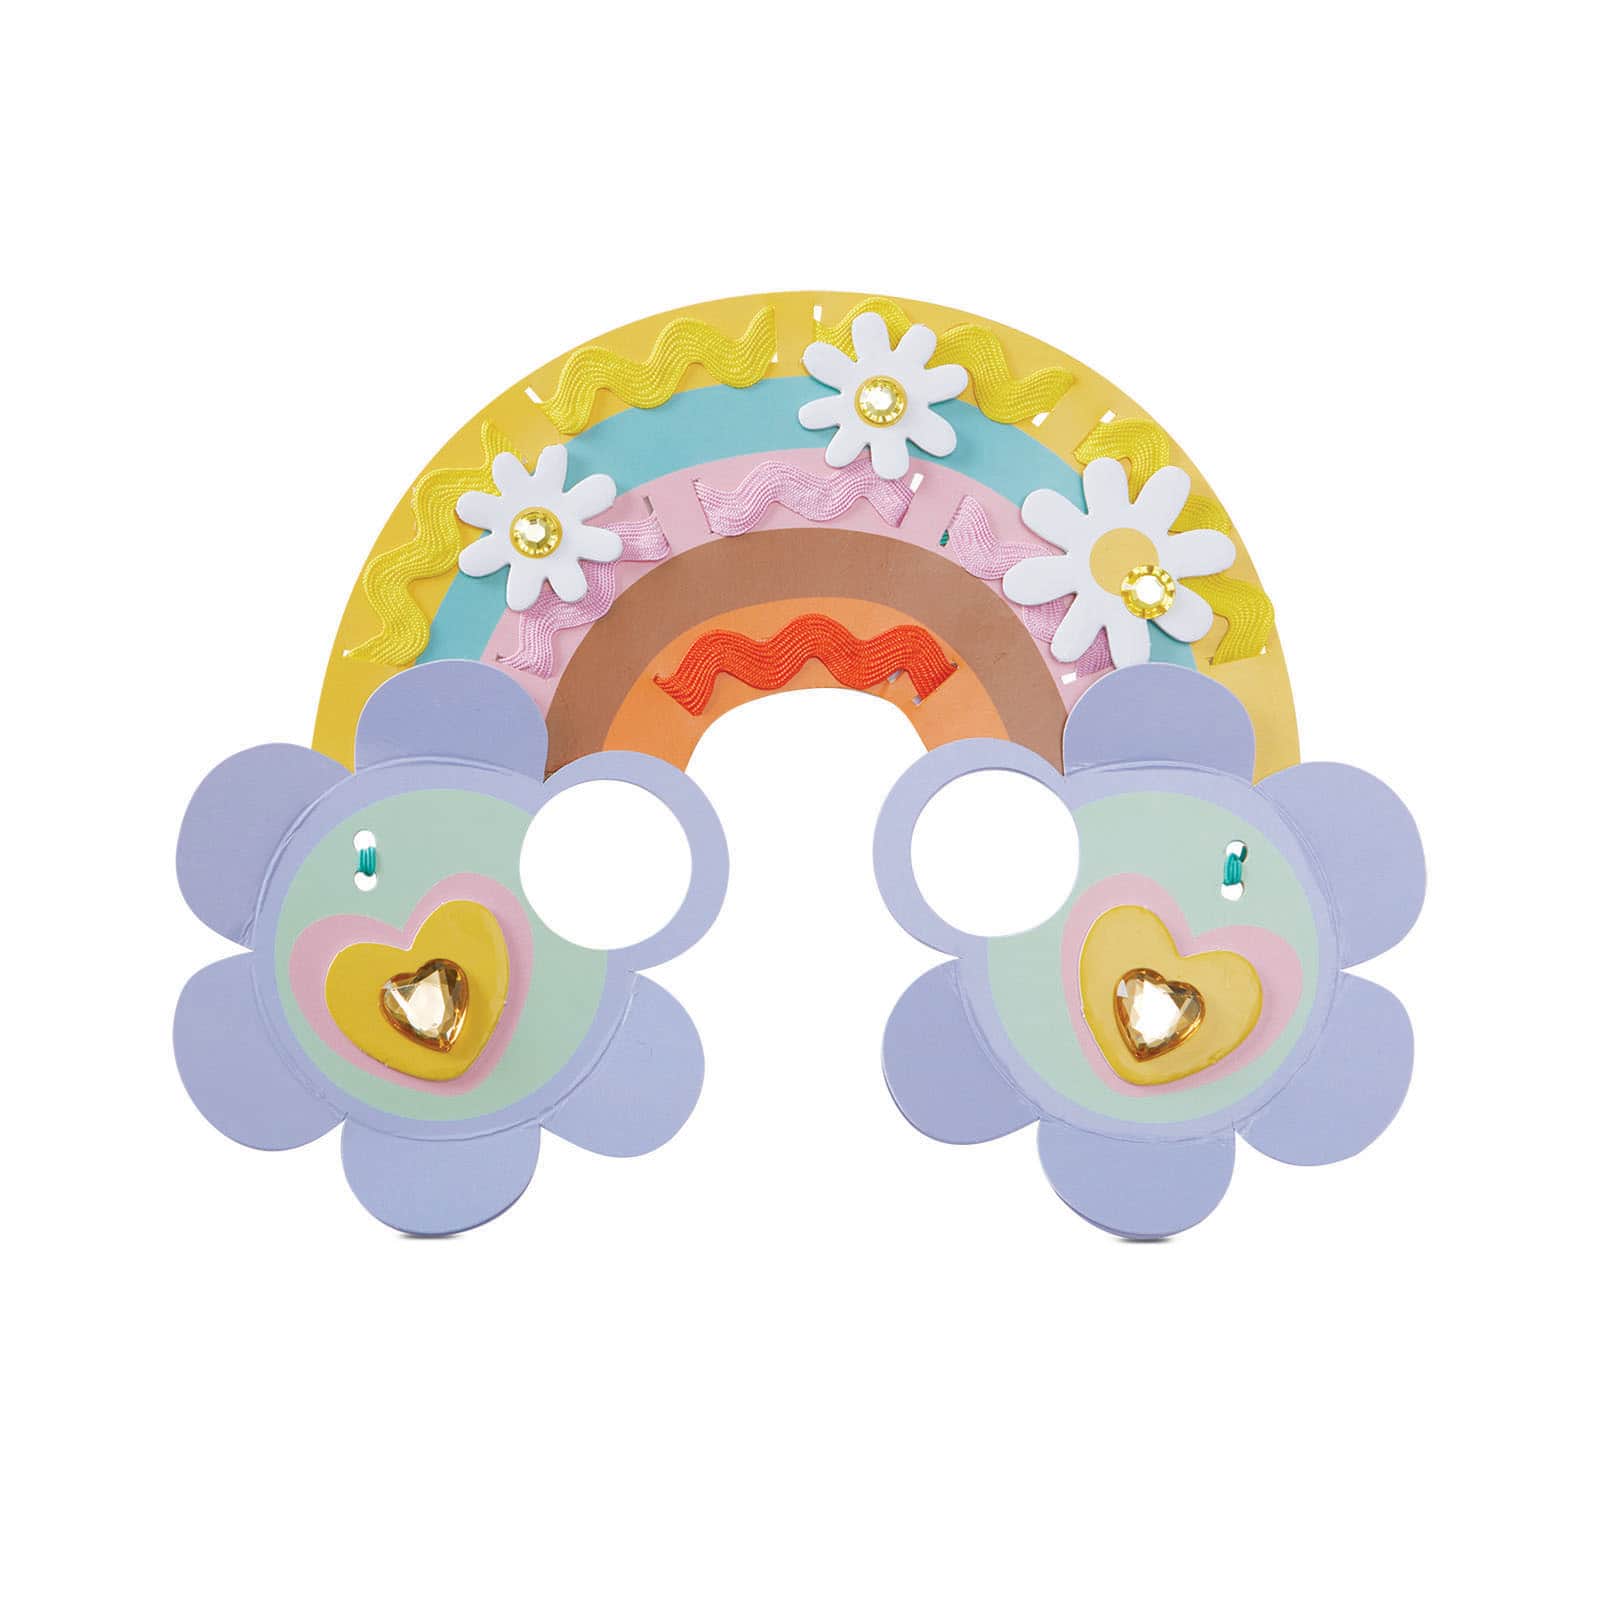 Summer Rainbow Mask Craft Kit by Creatology&#x2122;